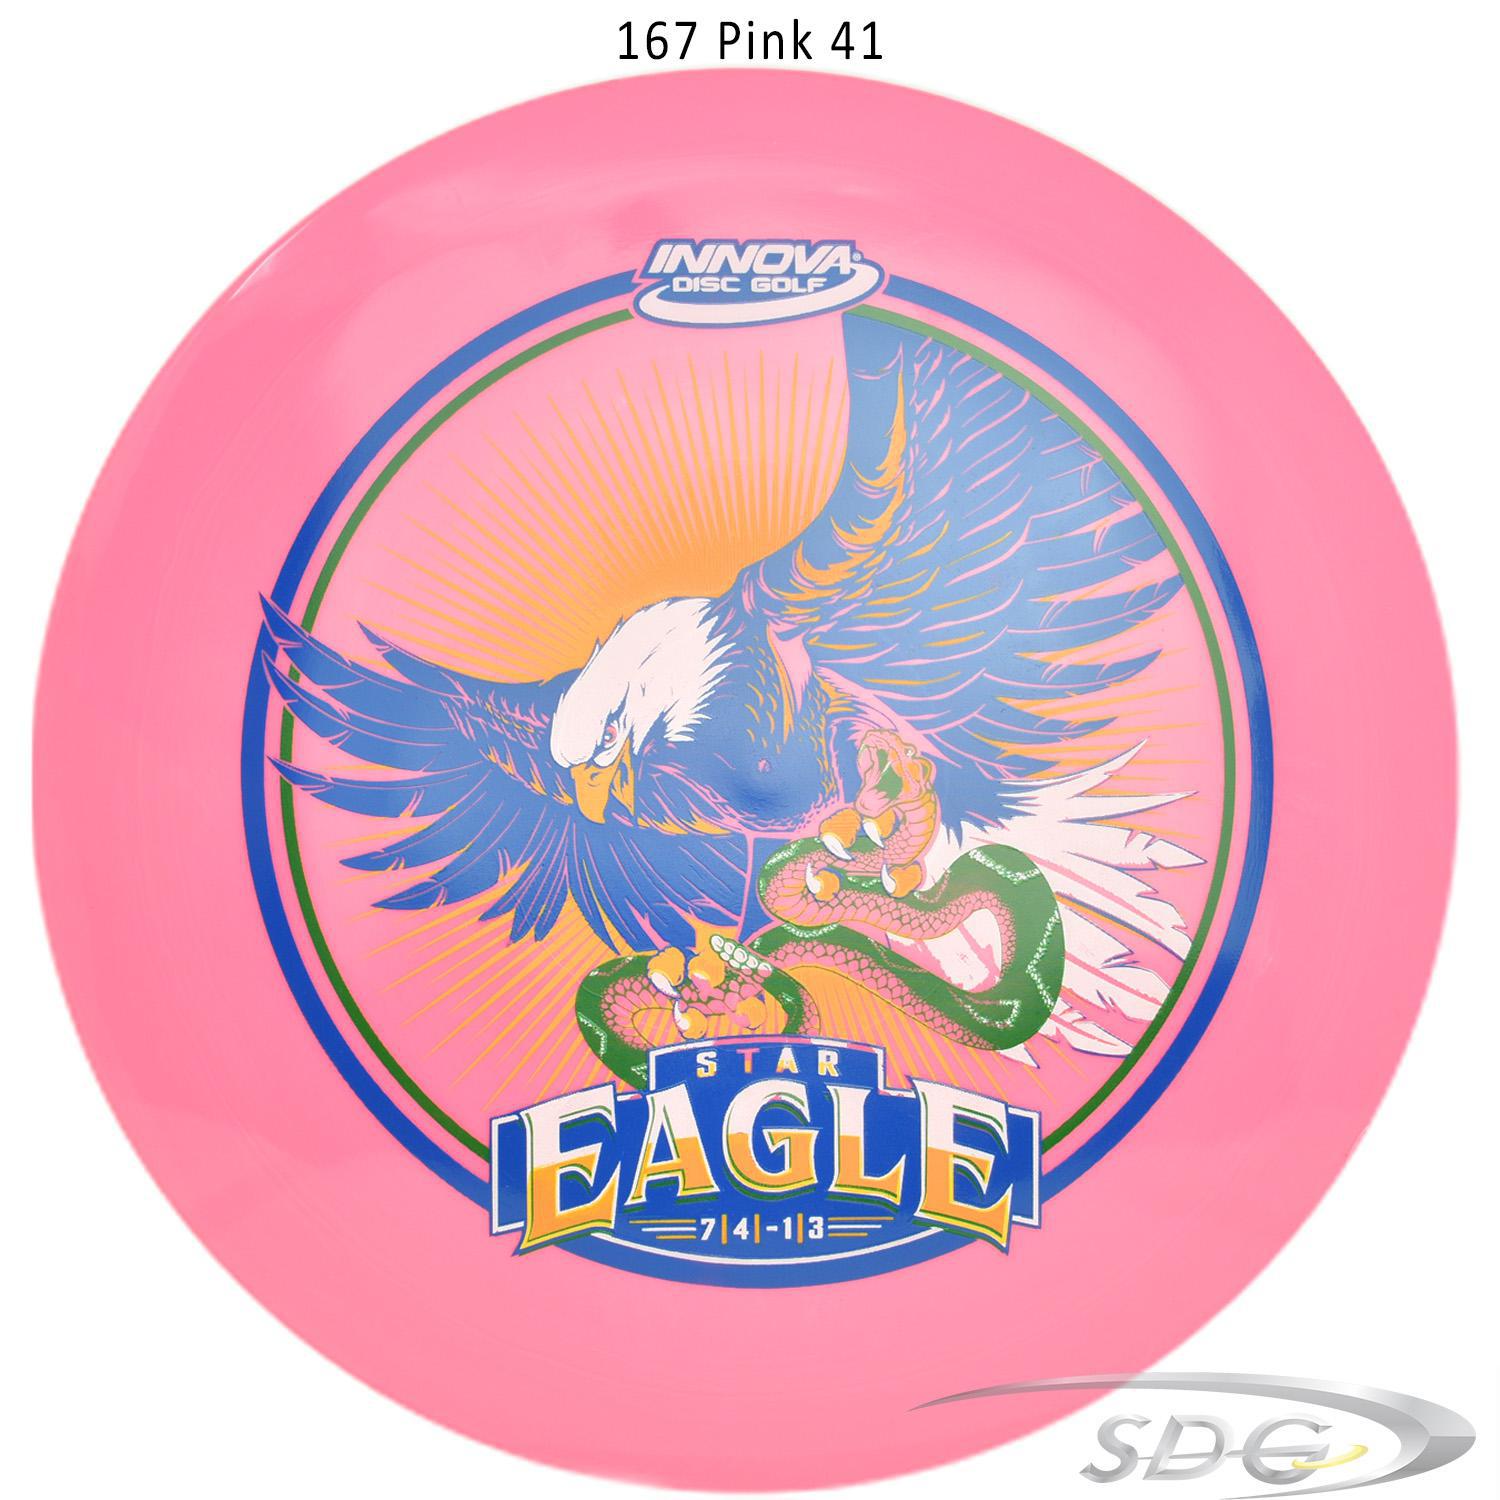 innova-star-eagle-disc-golf-fairway-driver 167 Pink 41 